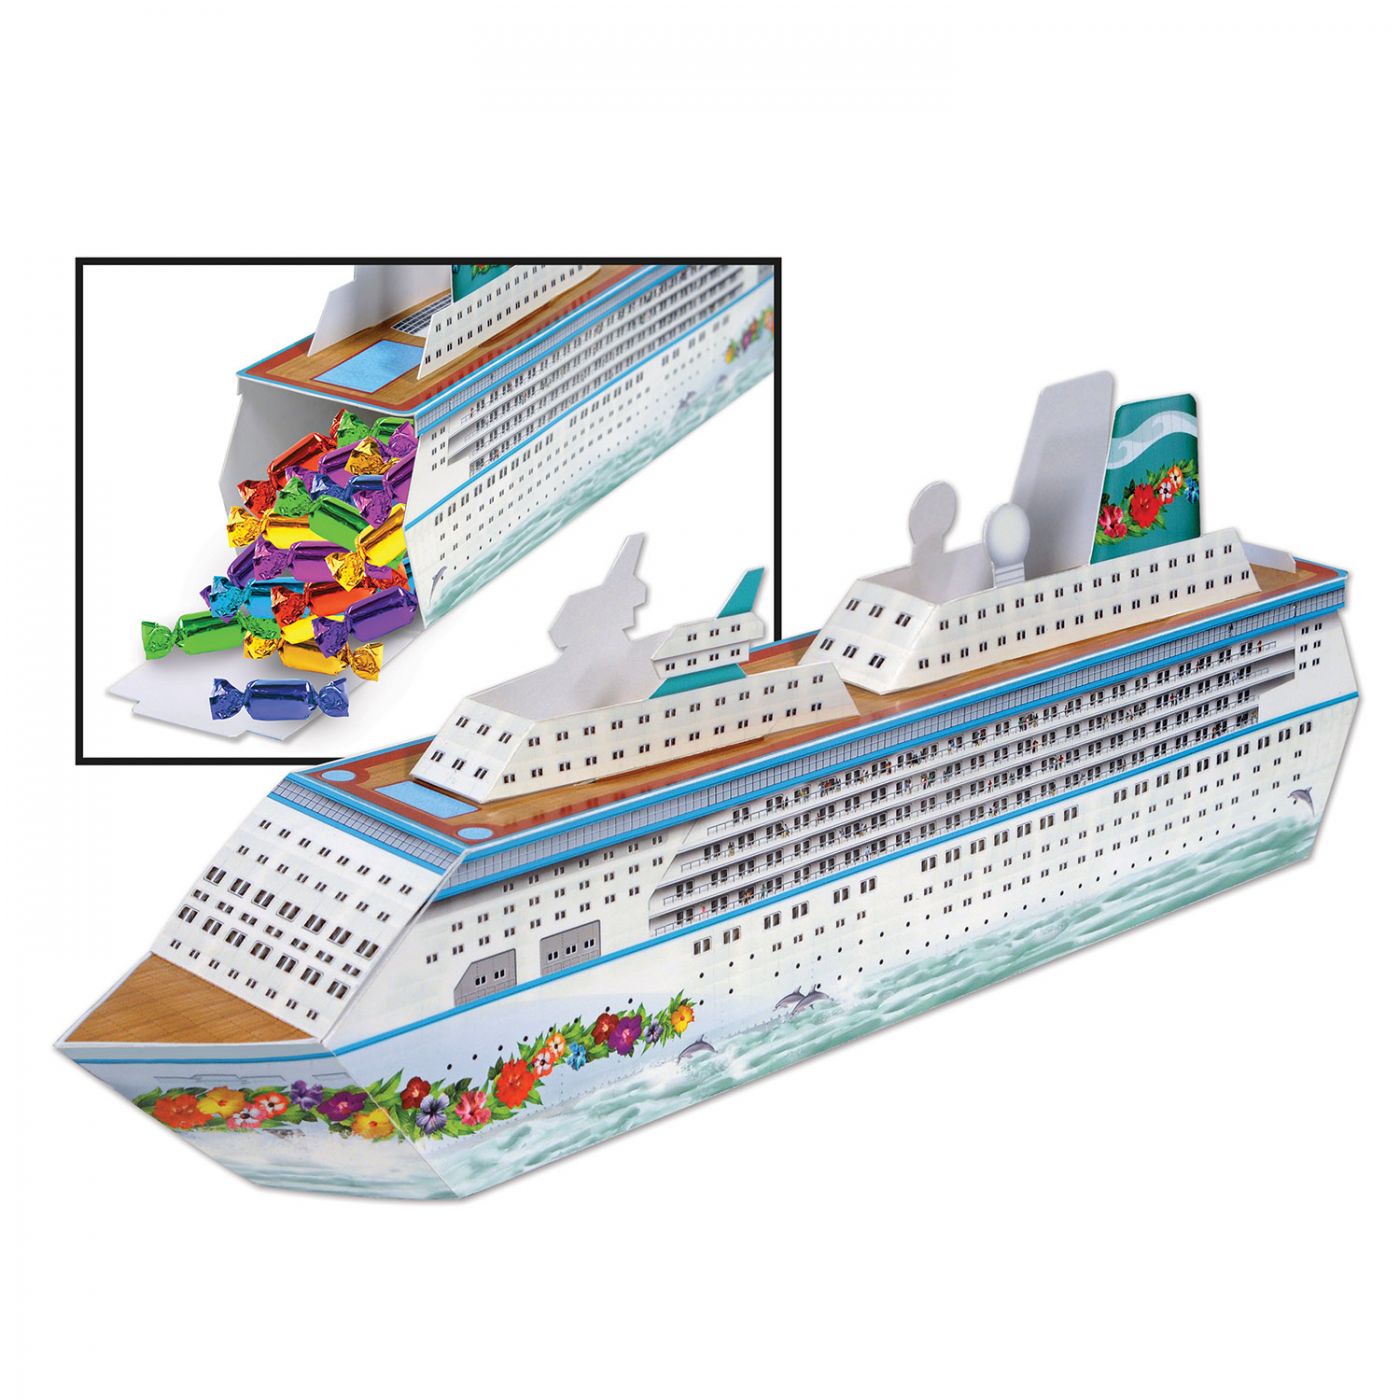 Cruise Ship Centerpiece image